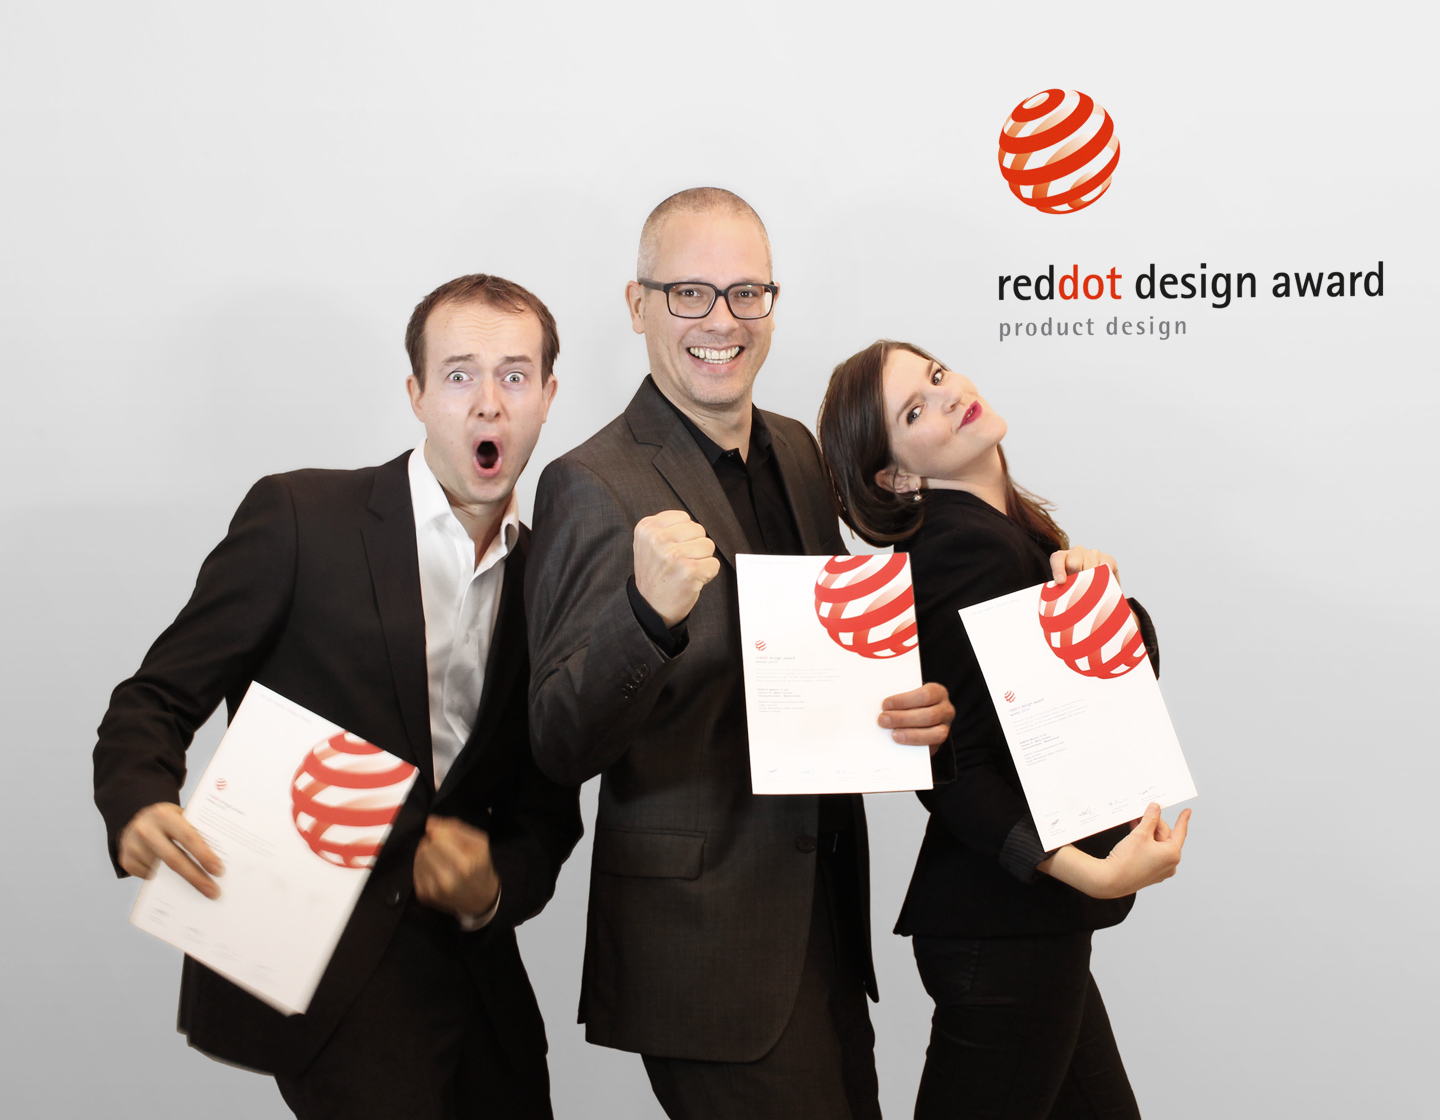 werksdesign designpreise awards red dot if verleihung